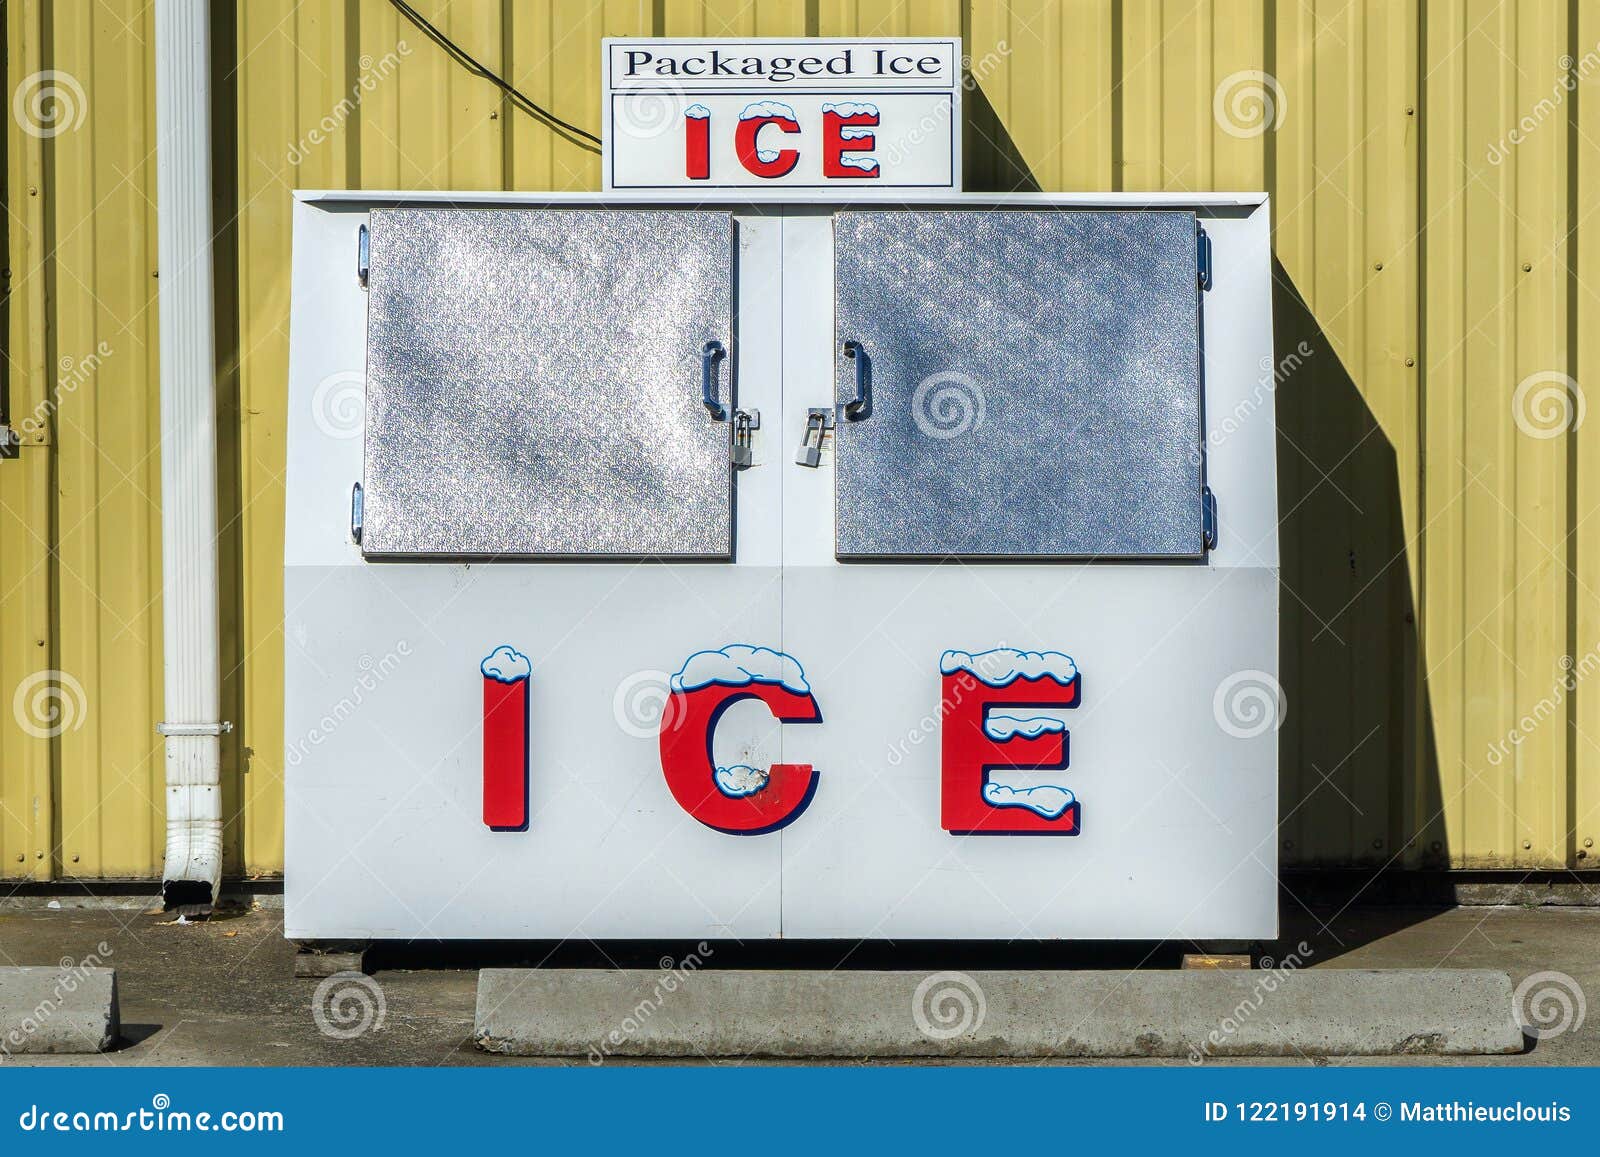 packaged ice freezer machine